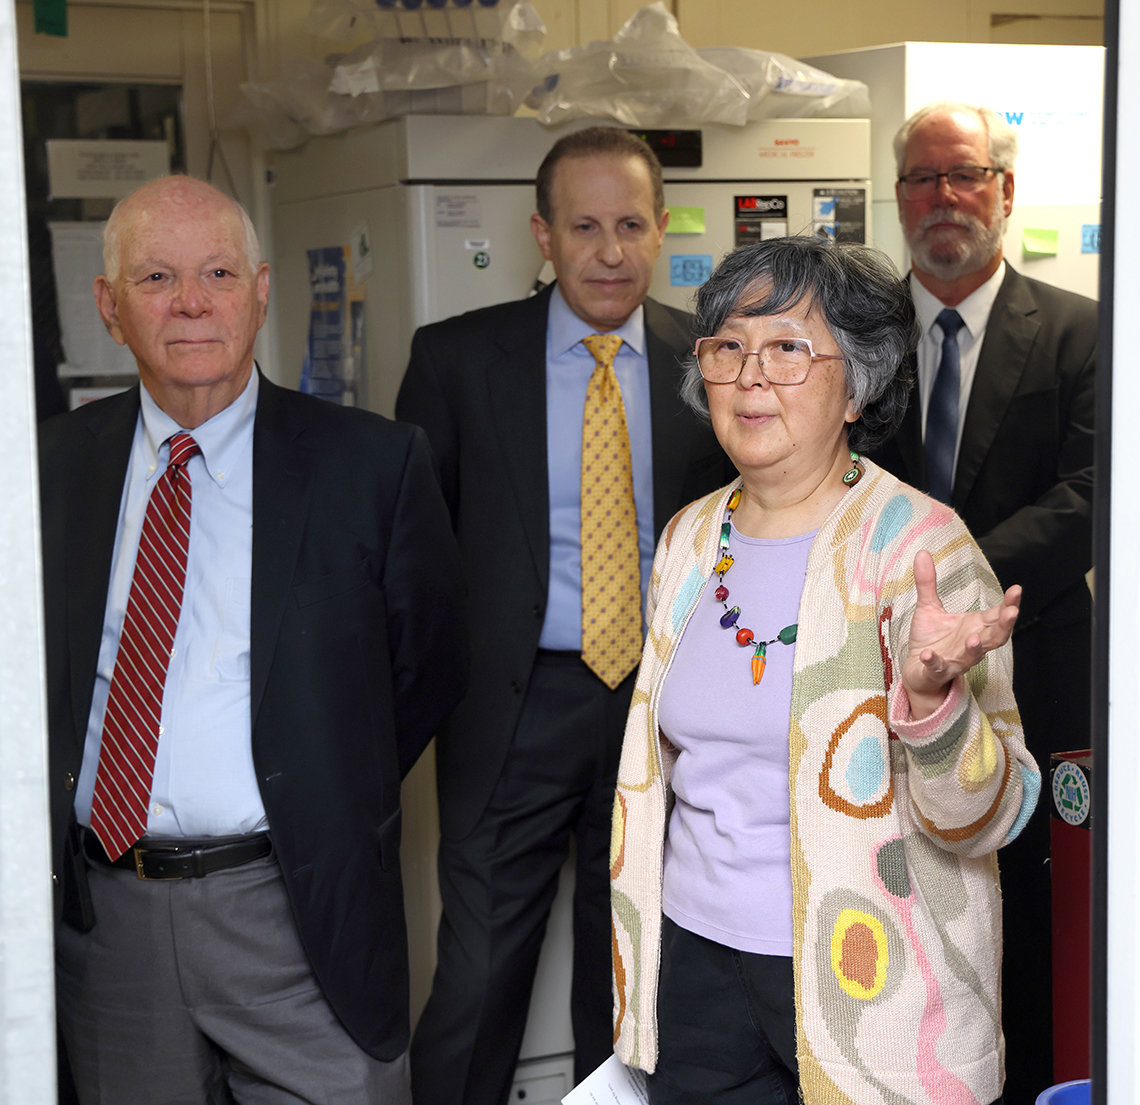 Cardin walks down a corridor with three NIH leaders.